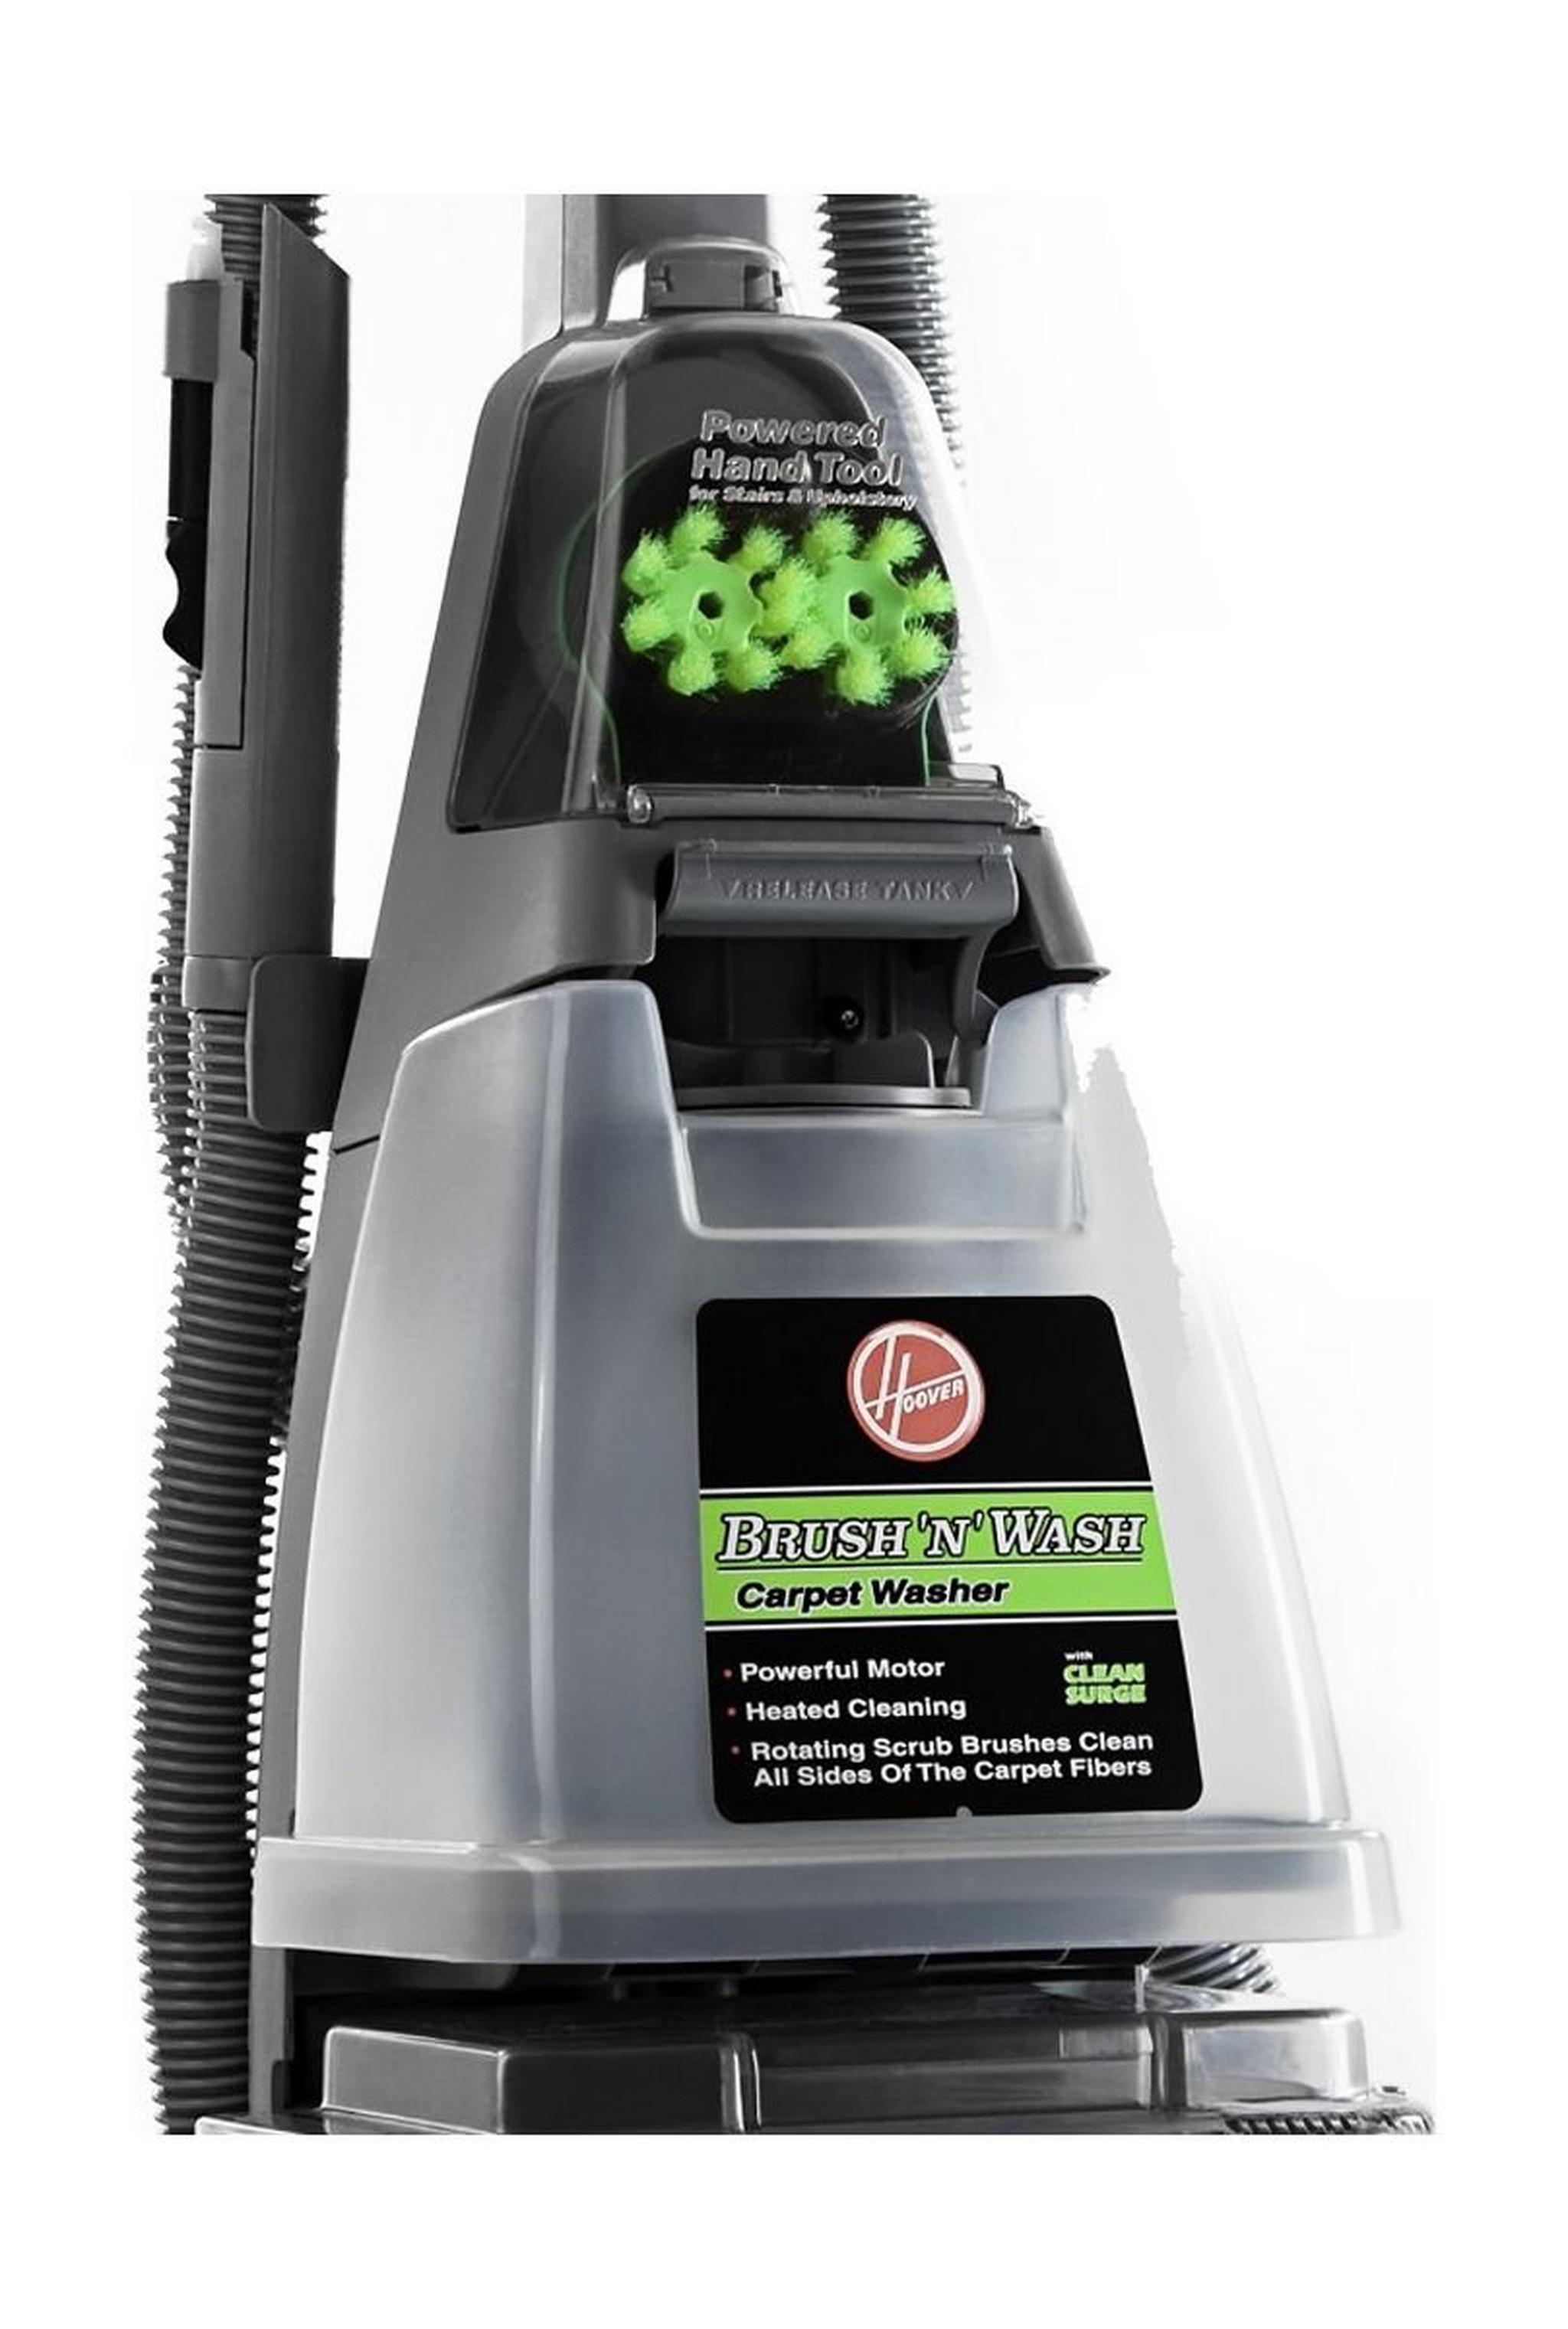 Hoover 1350w Steam Brush & Wash Vacuum Cleaner (F5916) – Black